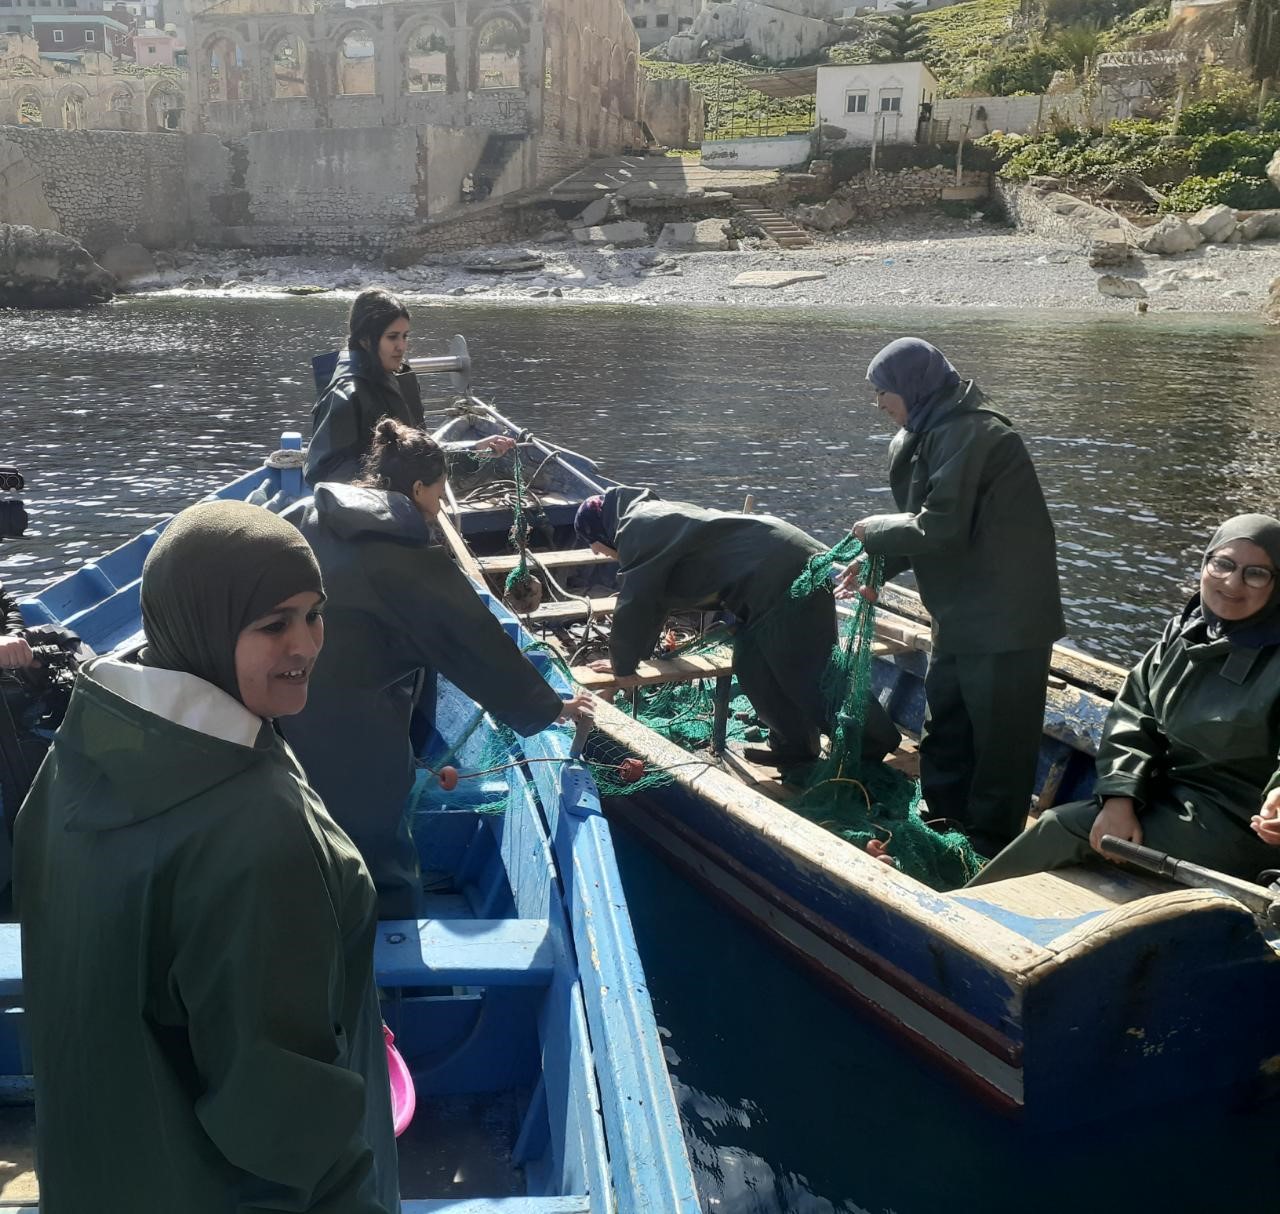 The struggle of fisherwomen in Morocco